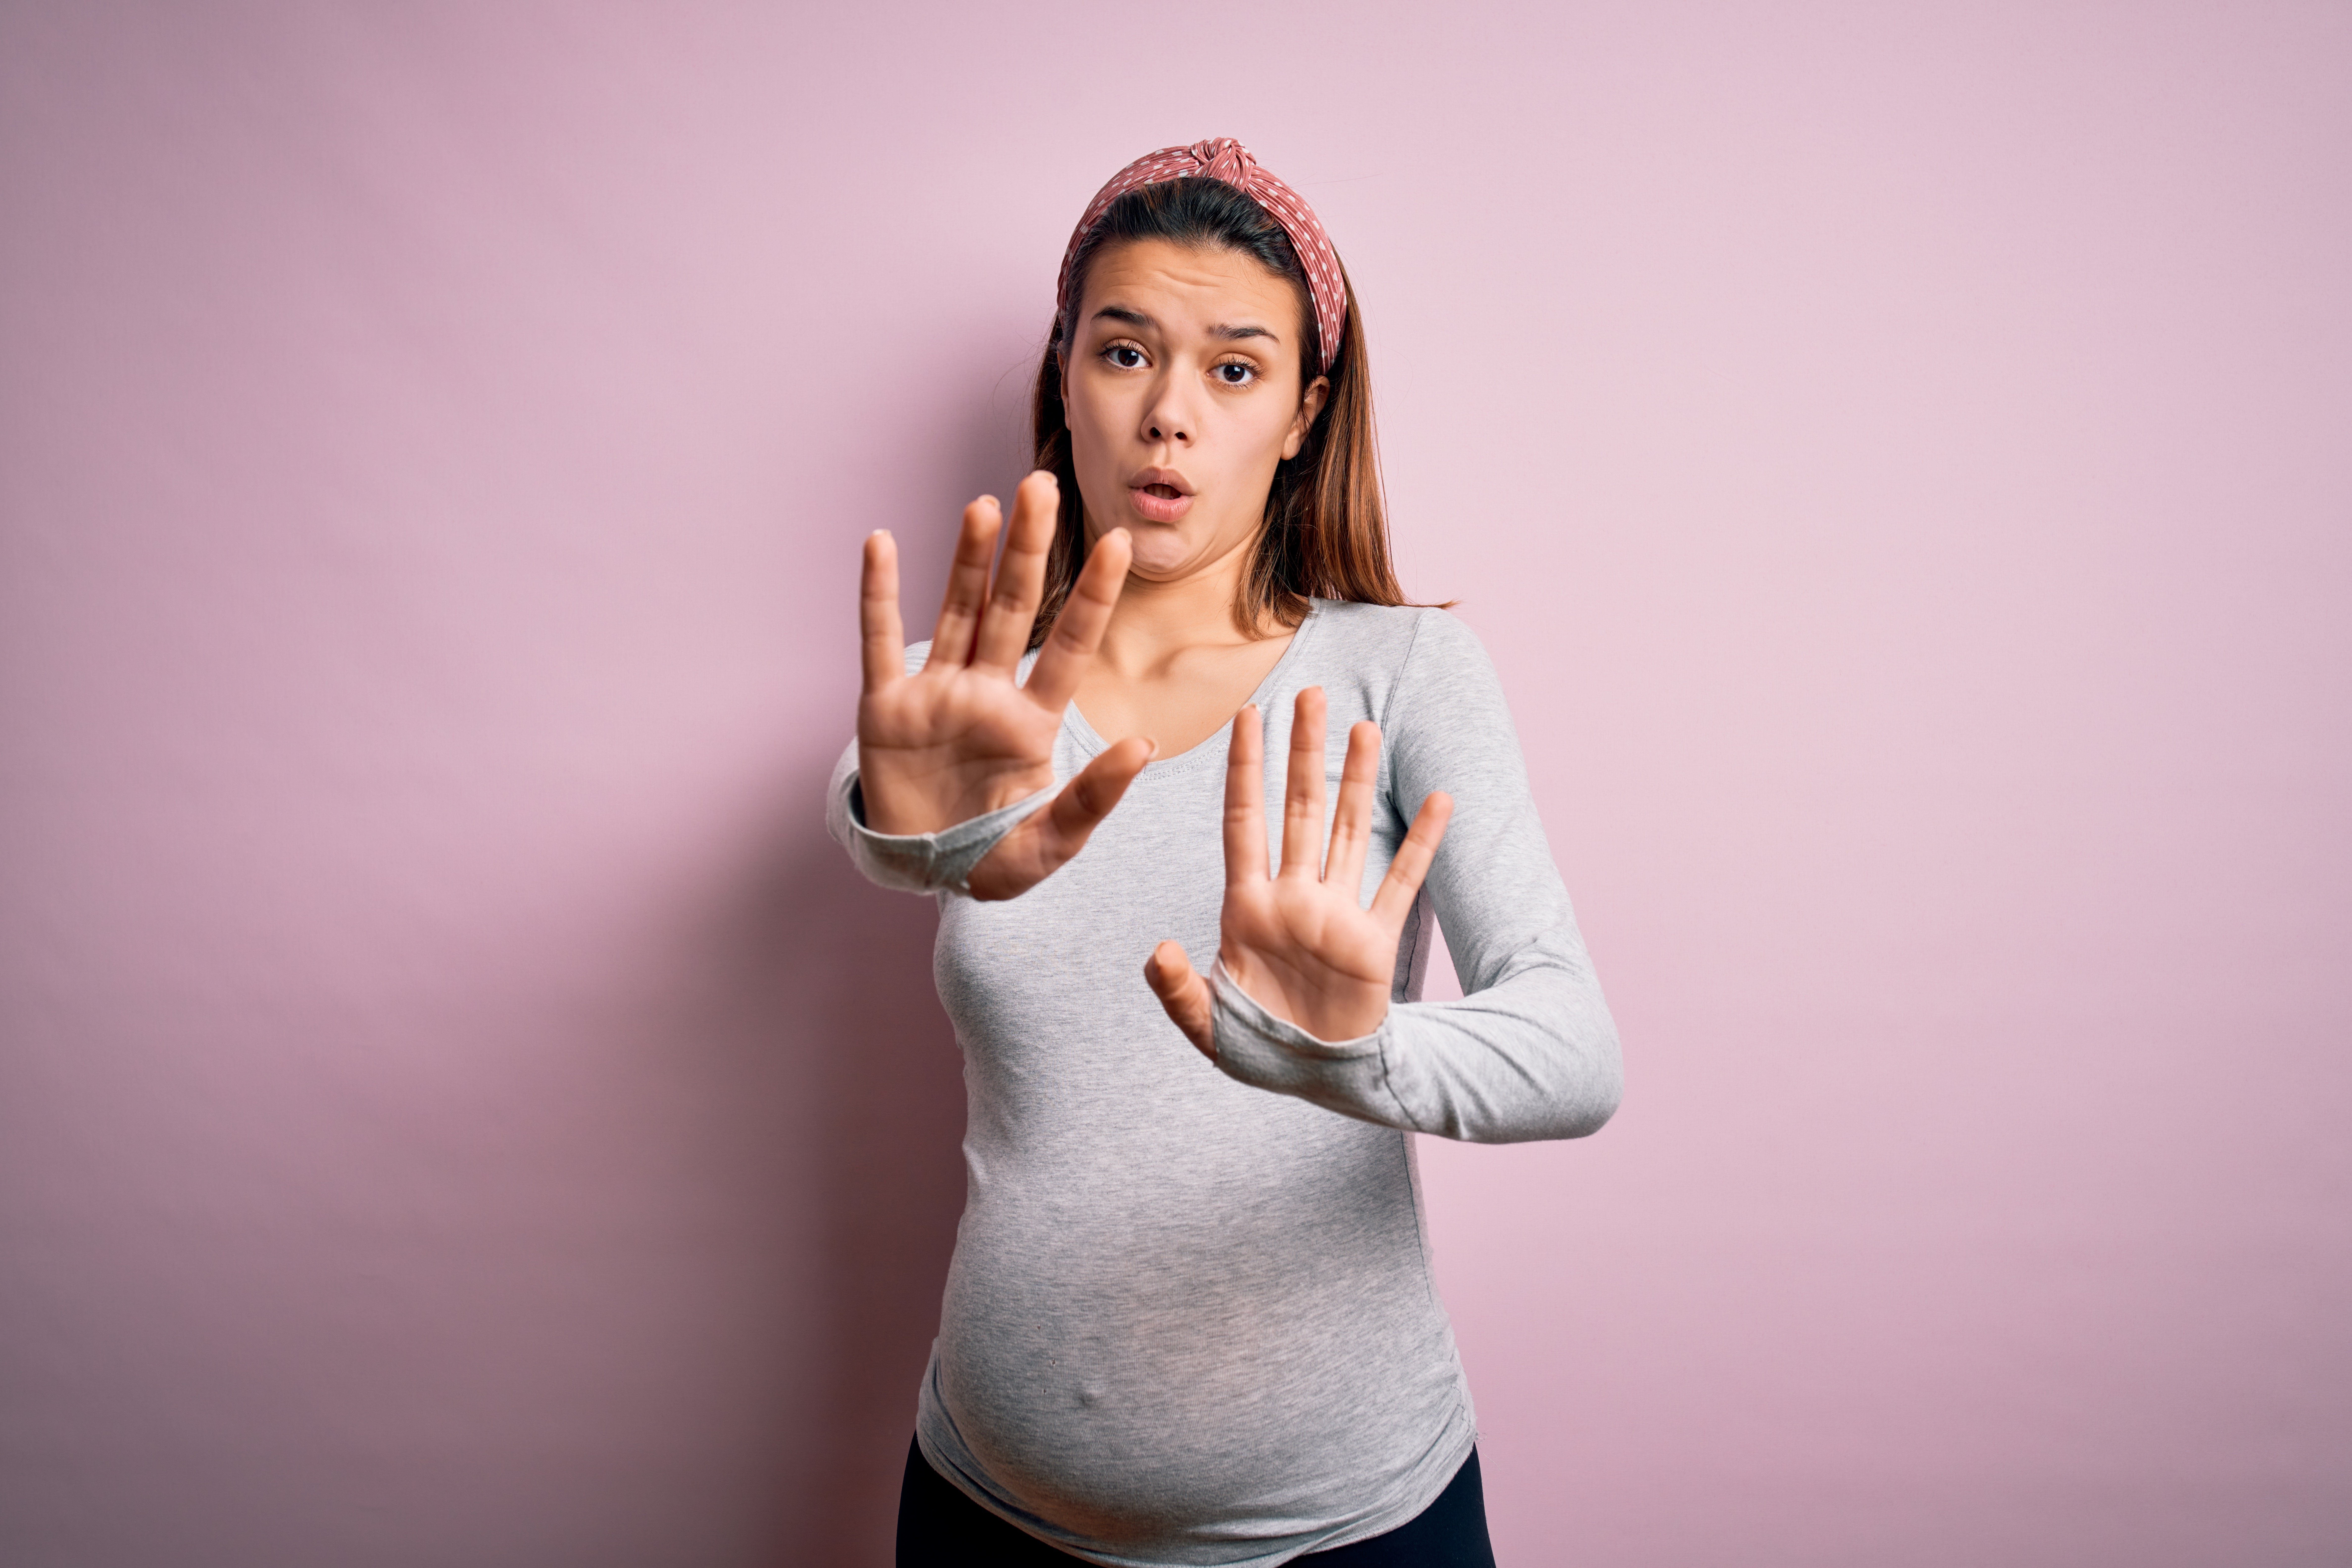 Adolescente embarazada. | Foto: Shutterstock